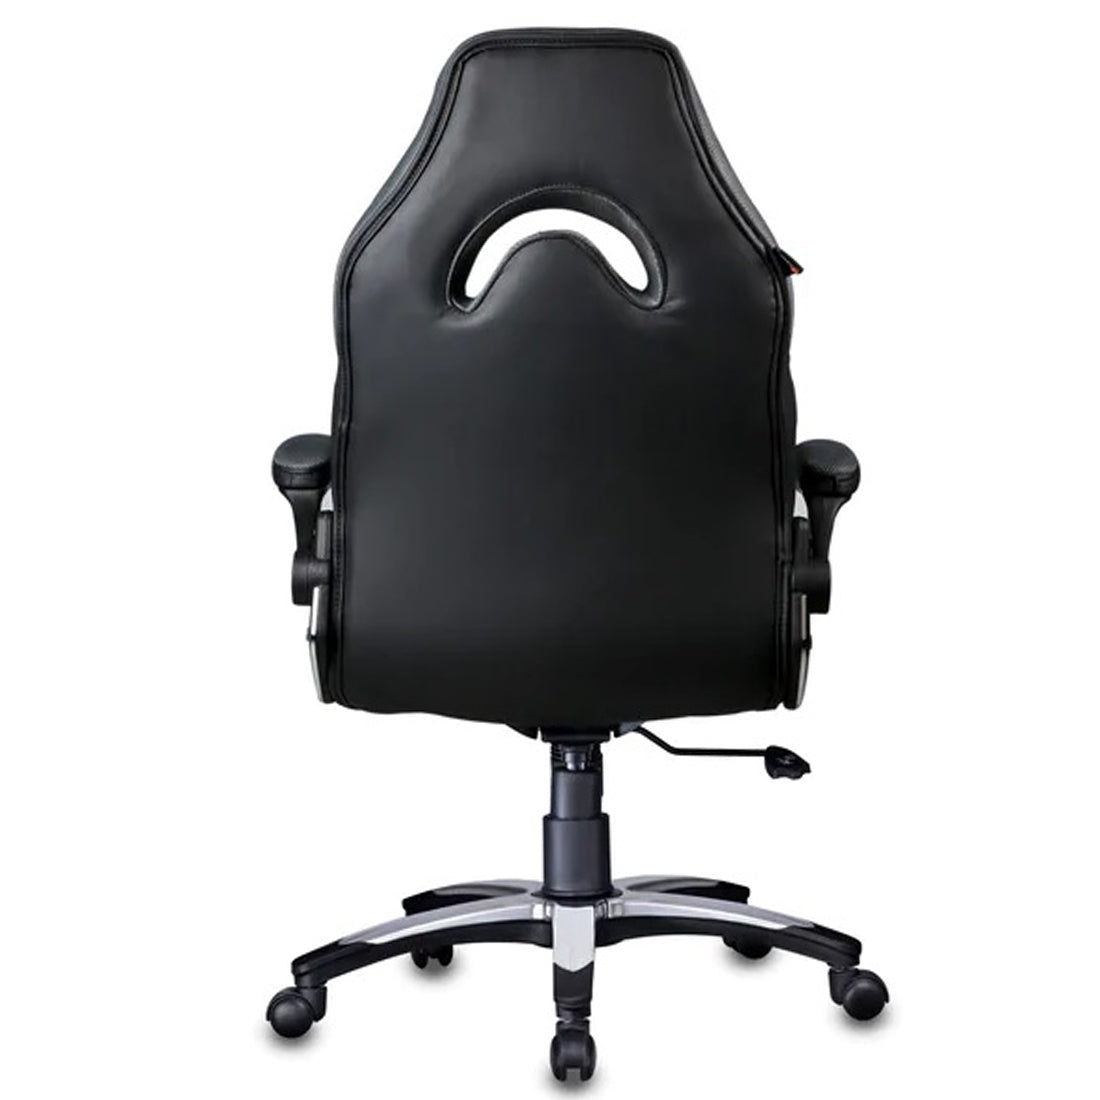 Detec™ Elegant Designer Gaming Executive Chair